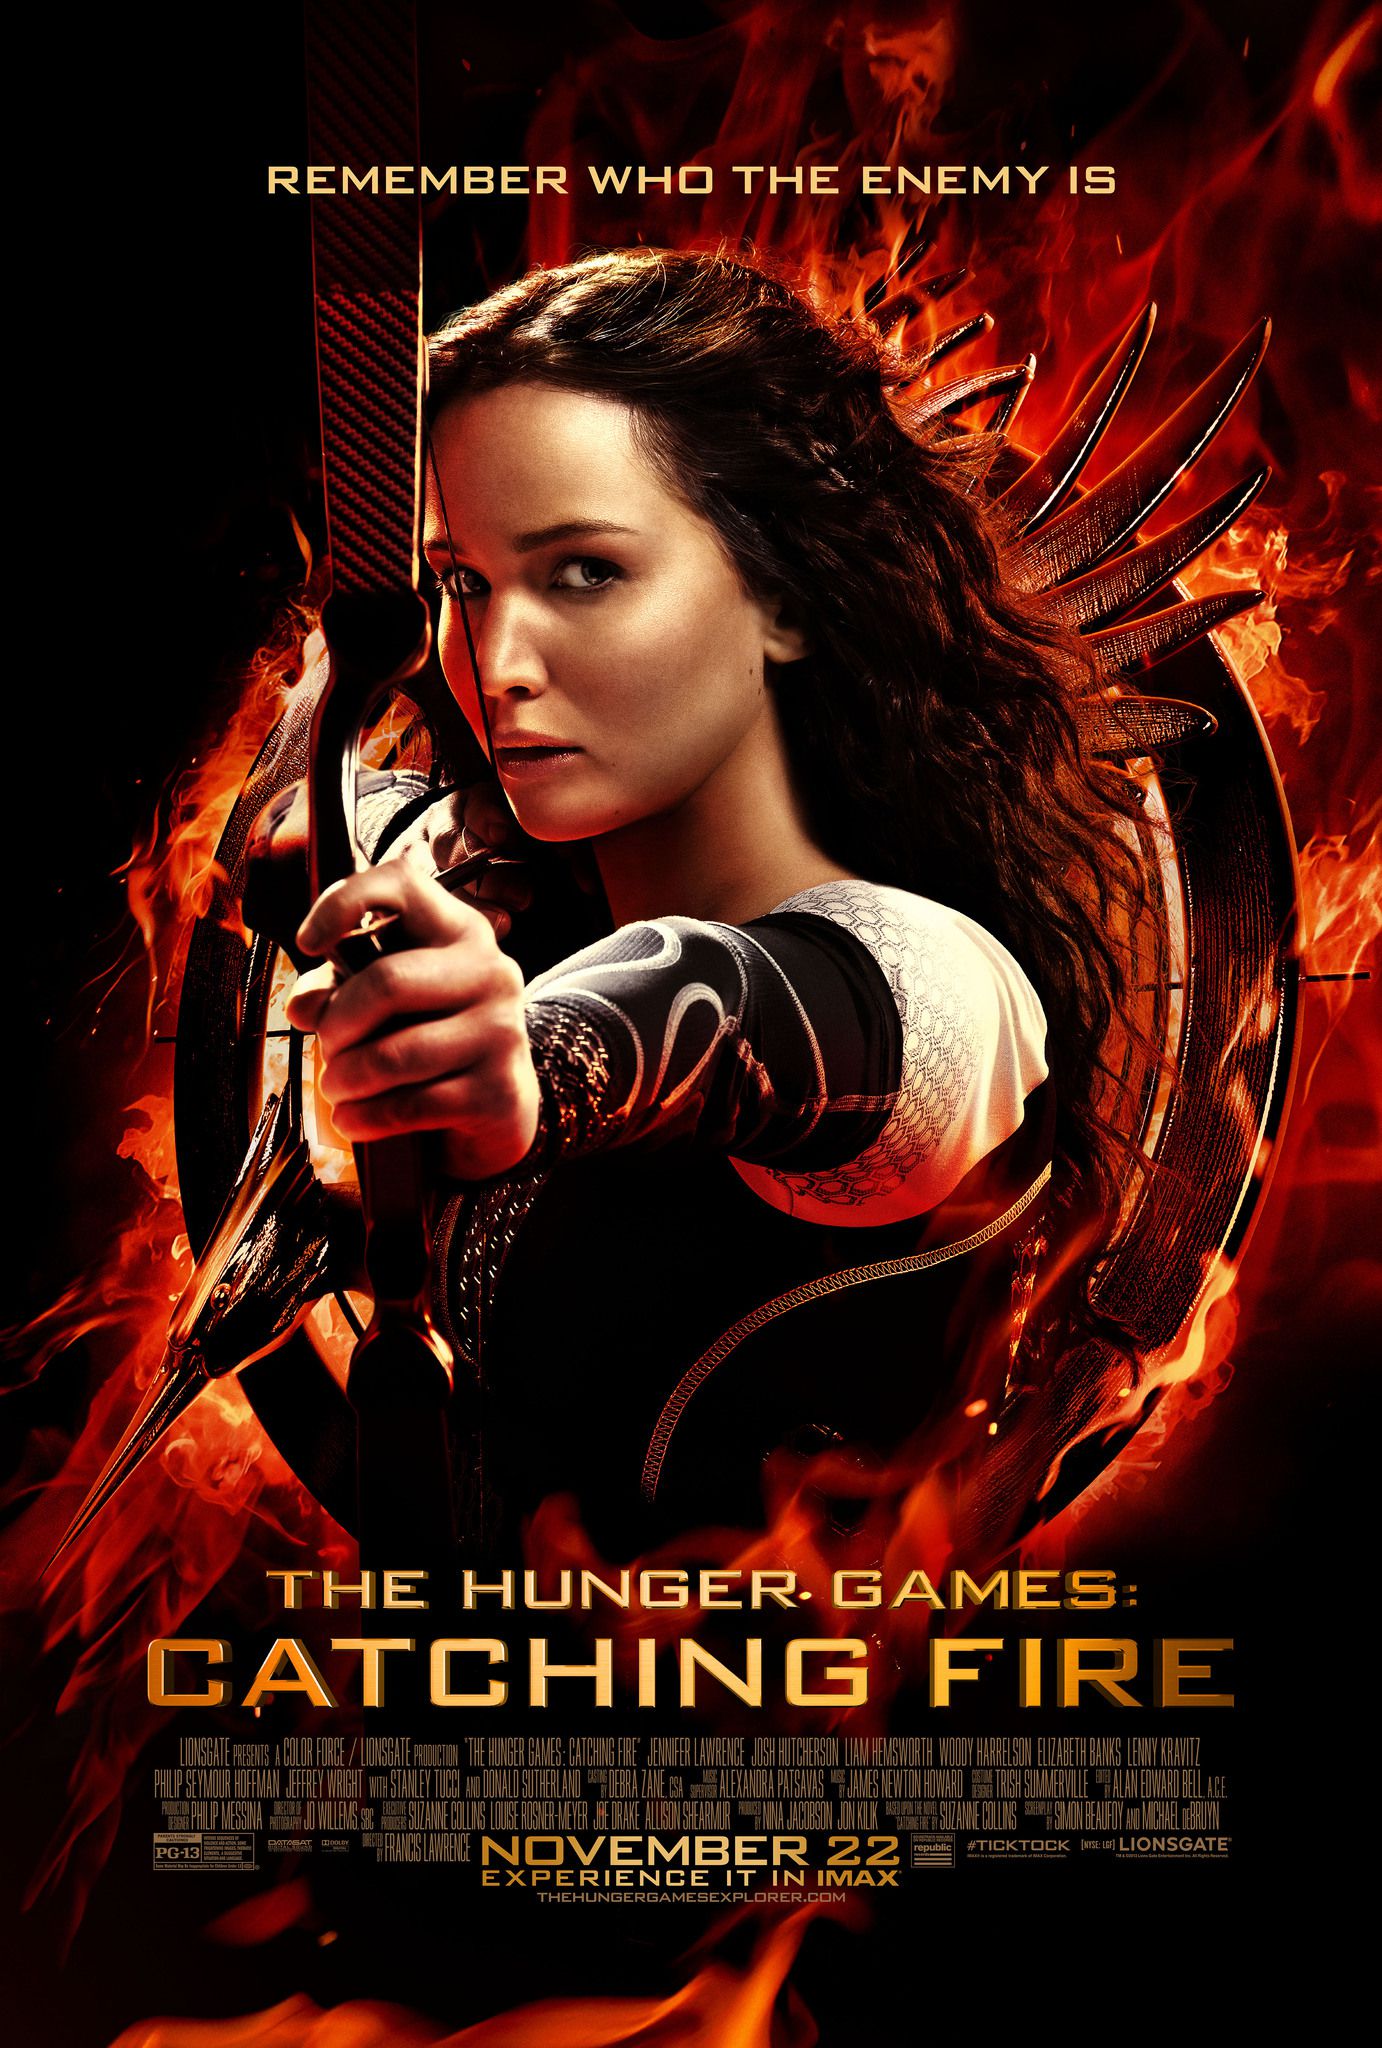 Urutan Nonton Film The Hunger Games